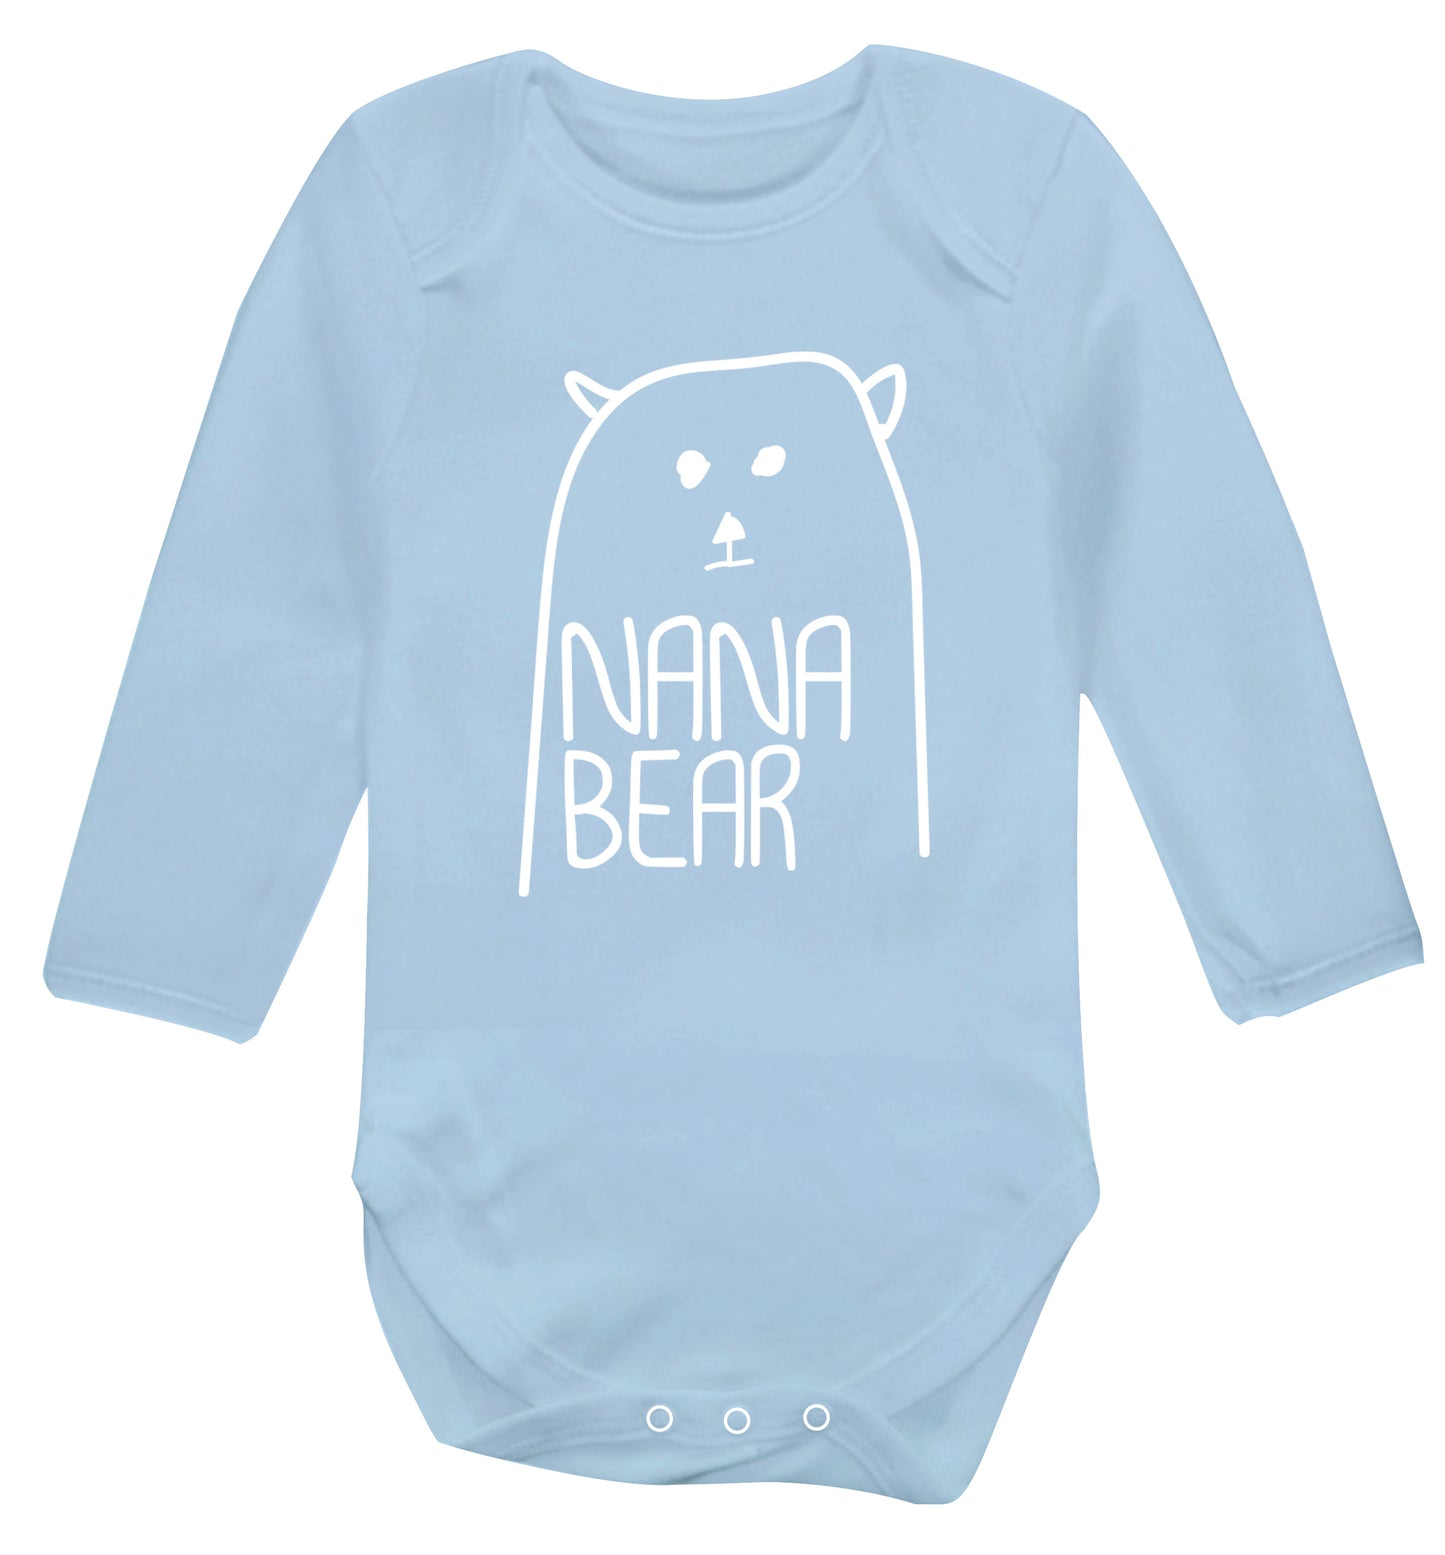 Nana bear Baby Vest long sleeved pale blue 6-12 months